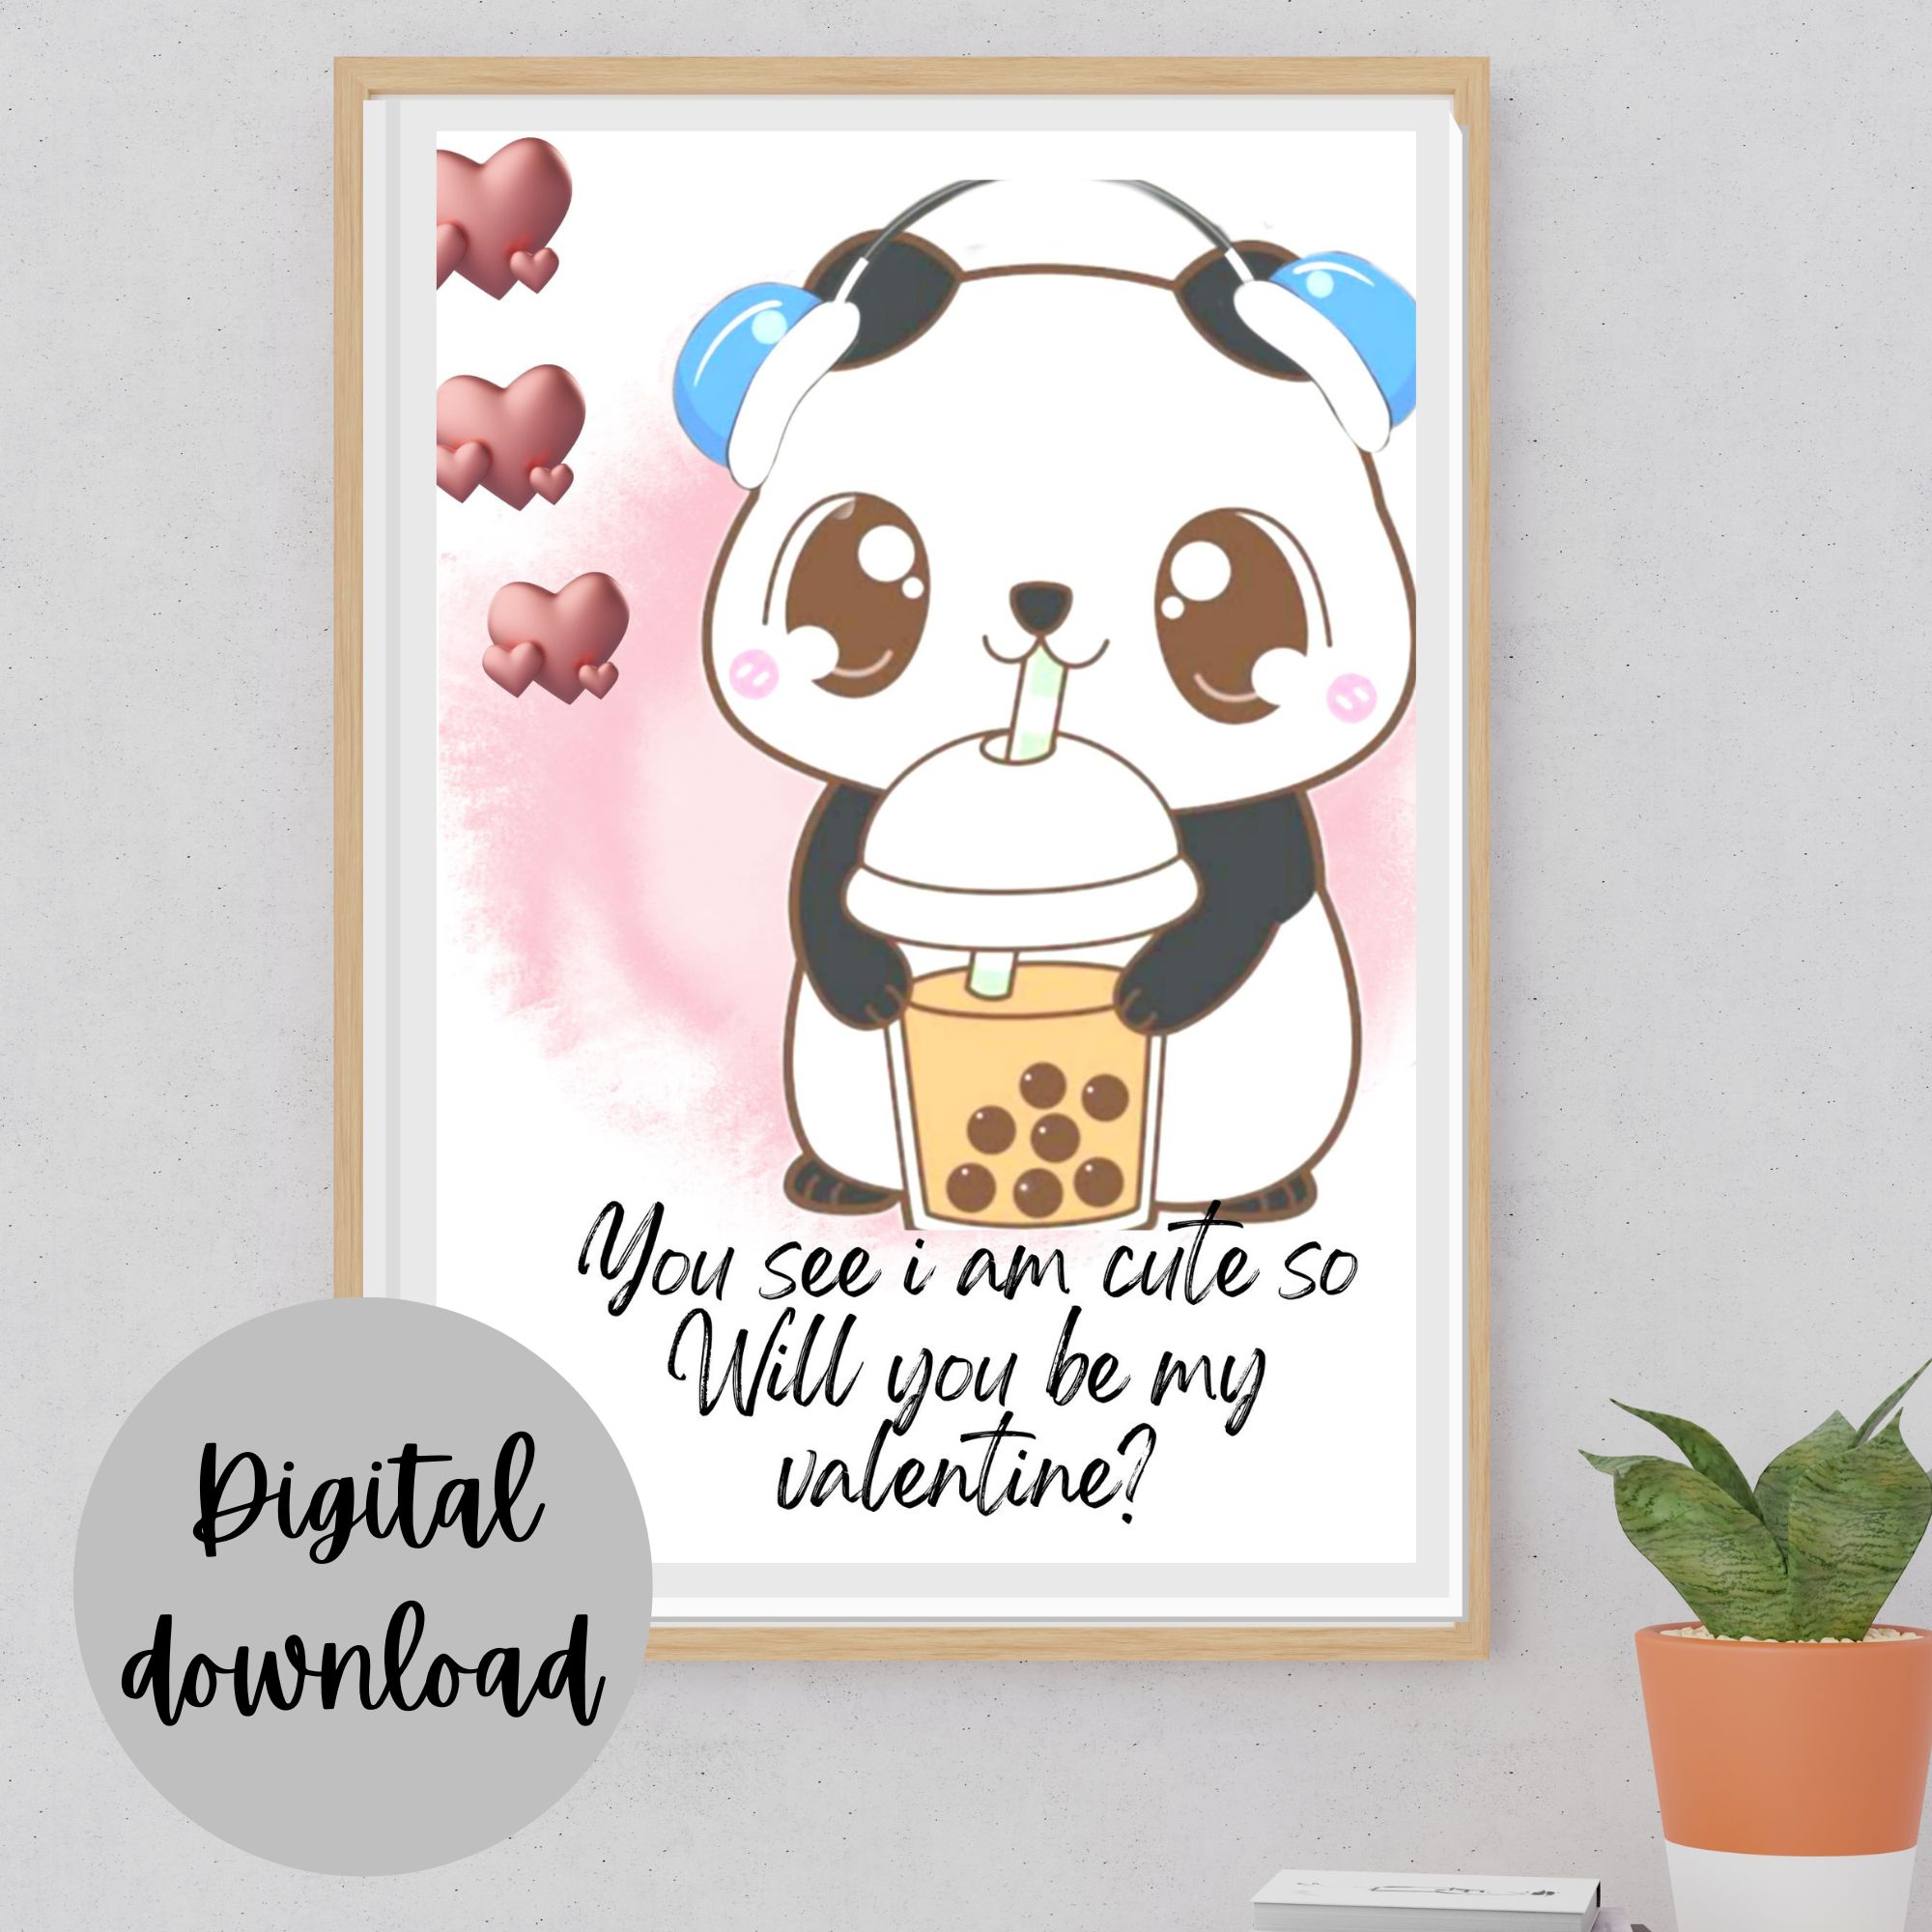 Cute Panda Wall Art Decor Printable cover image.